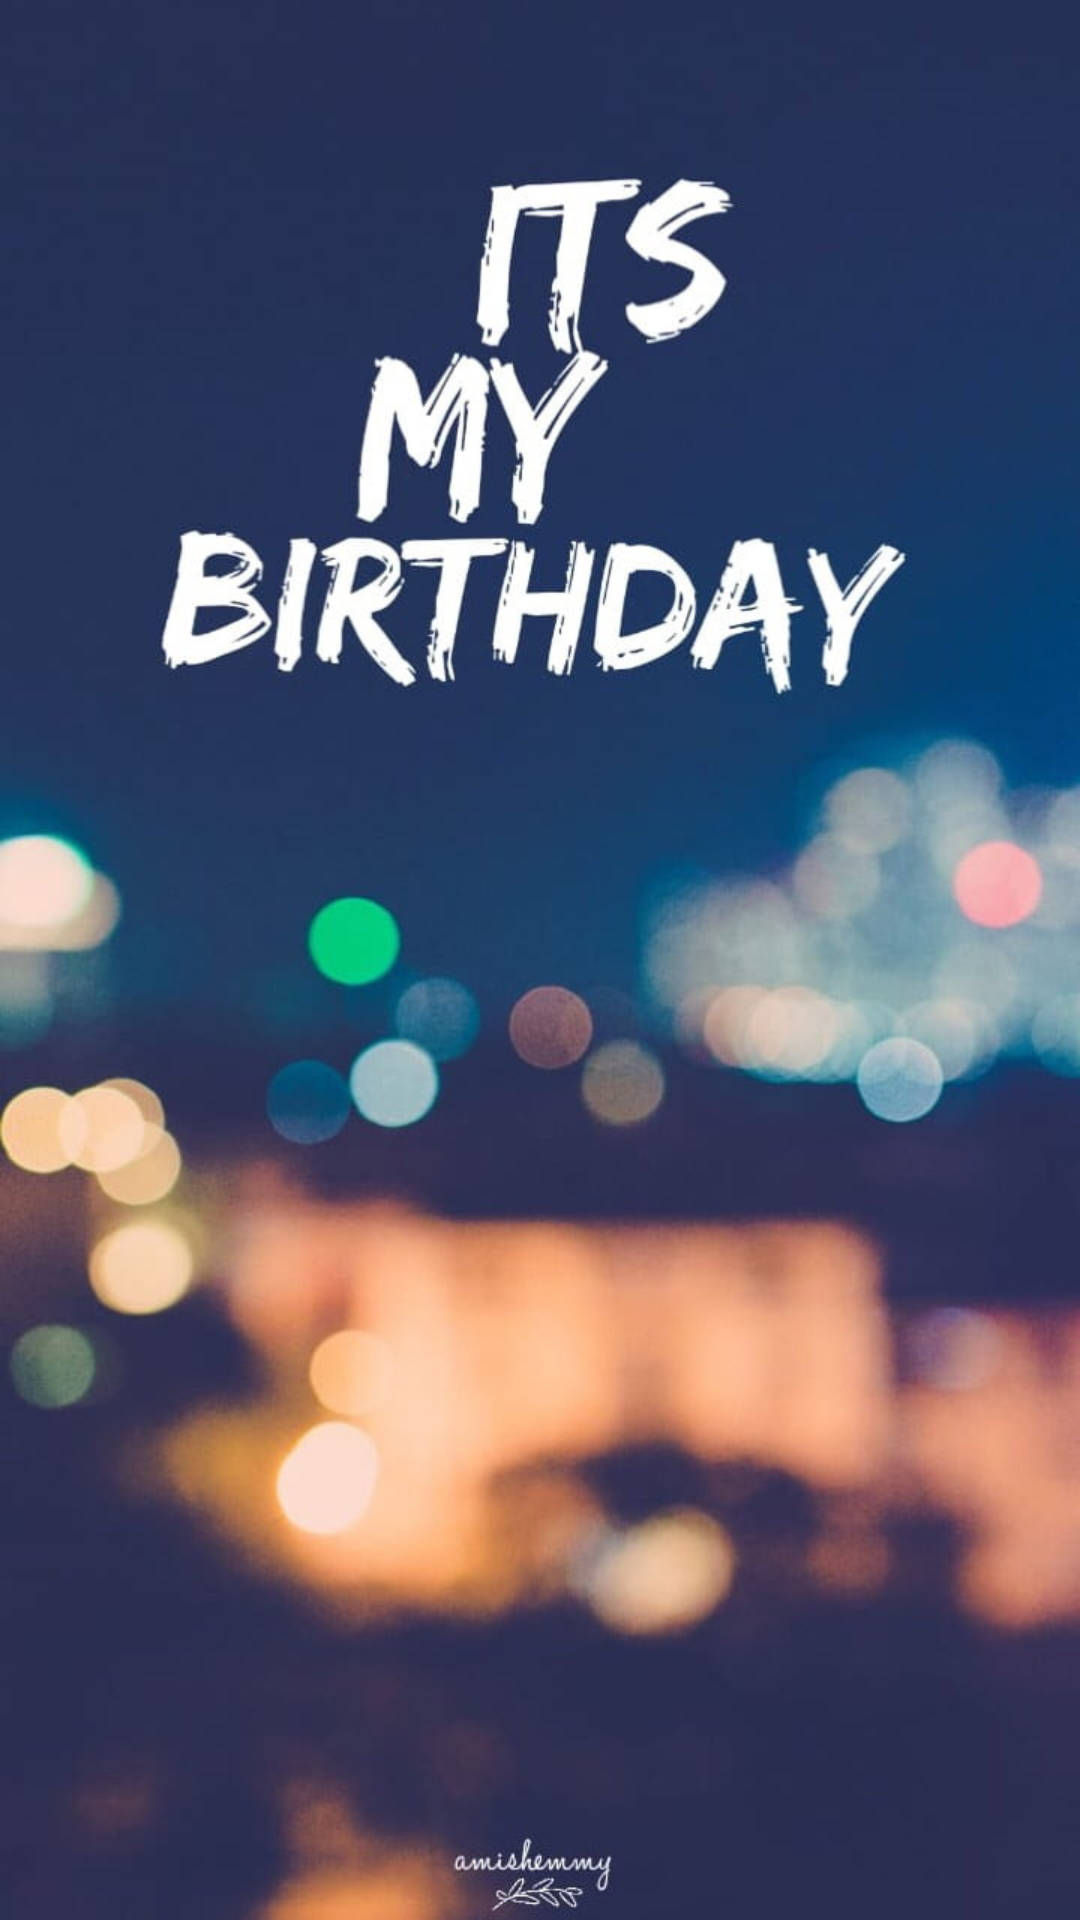 Greeting Card Saying “It’s My Birthday” Wallpaper